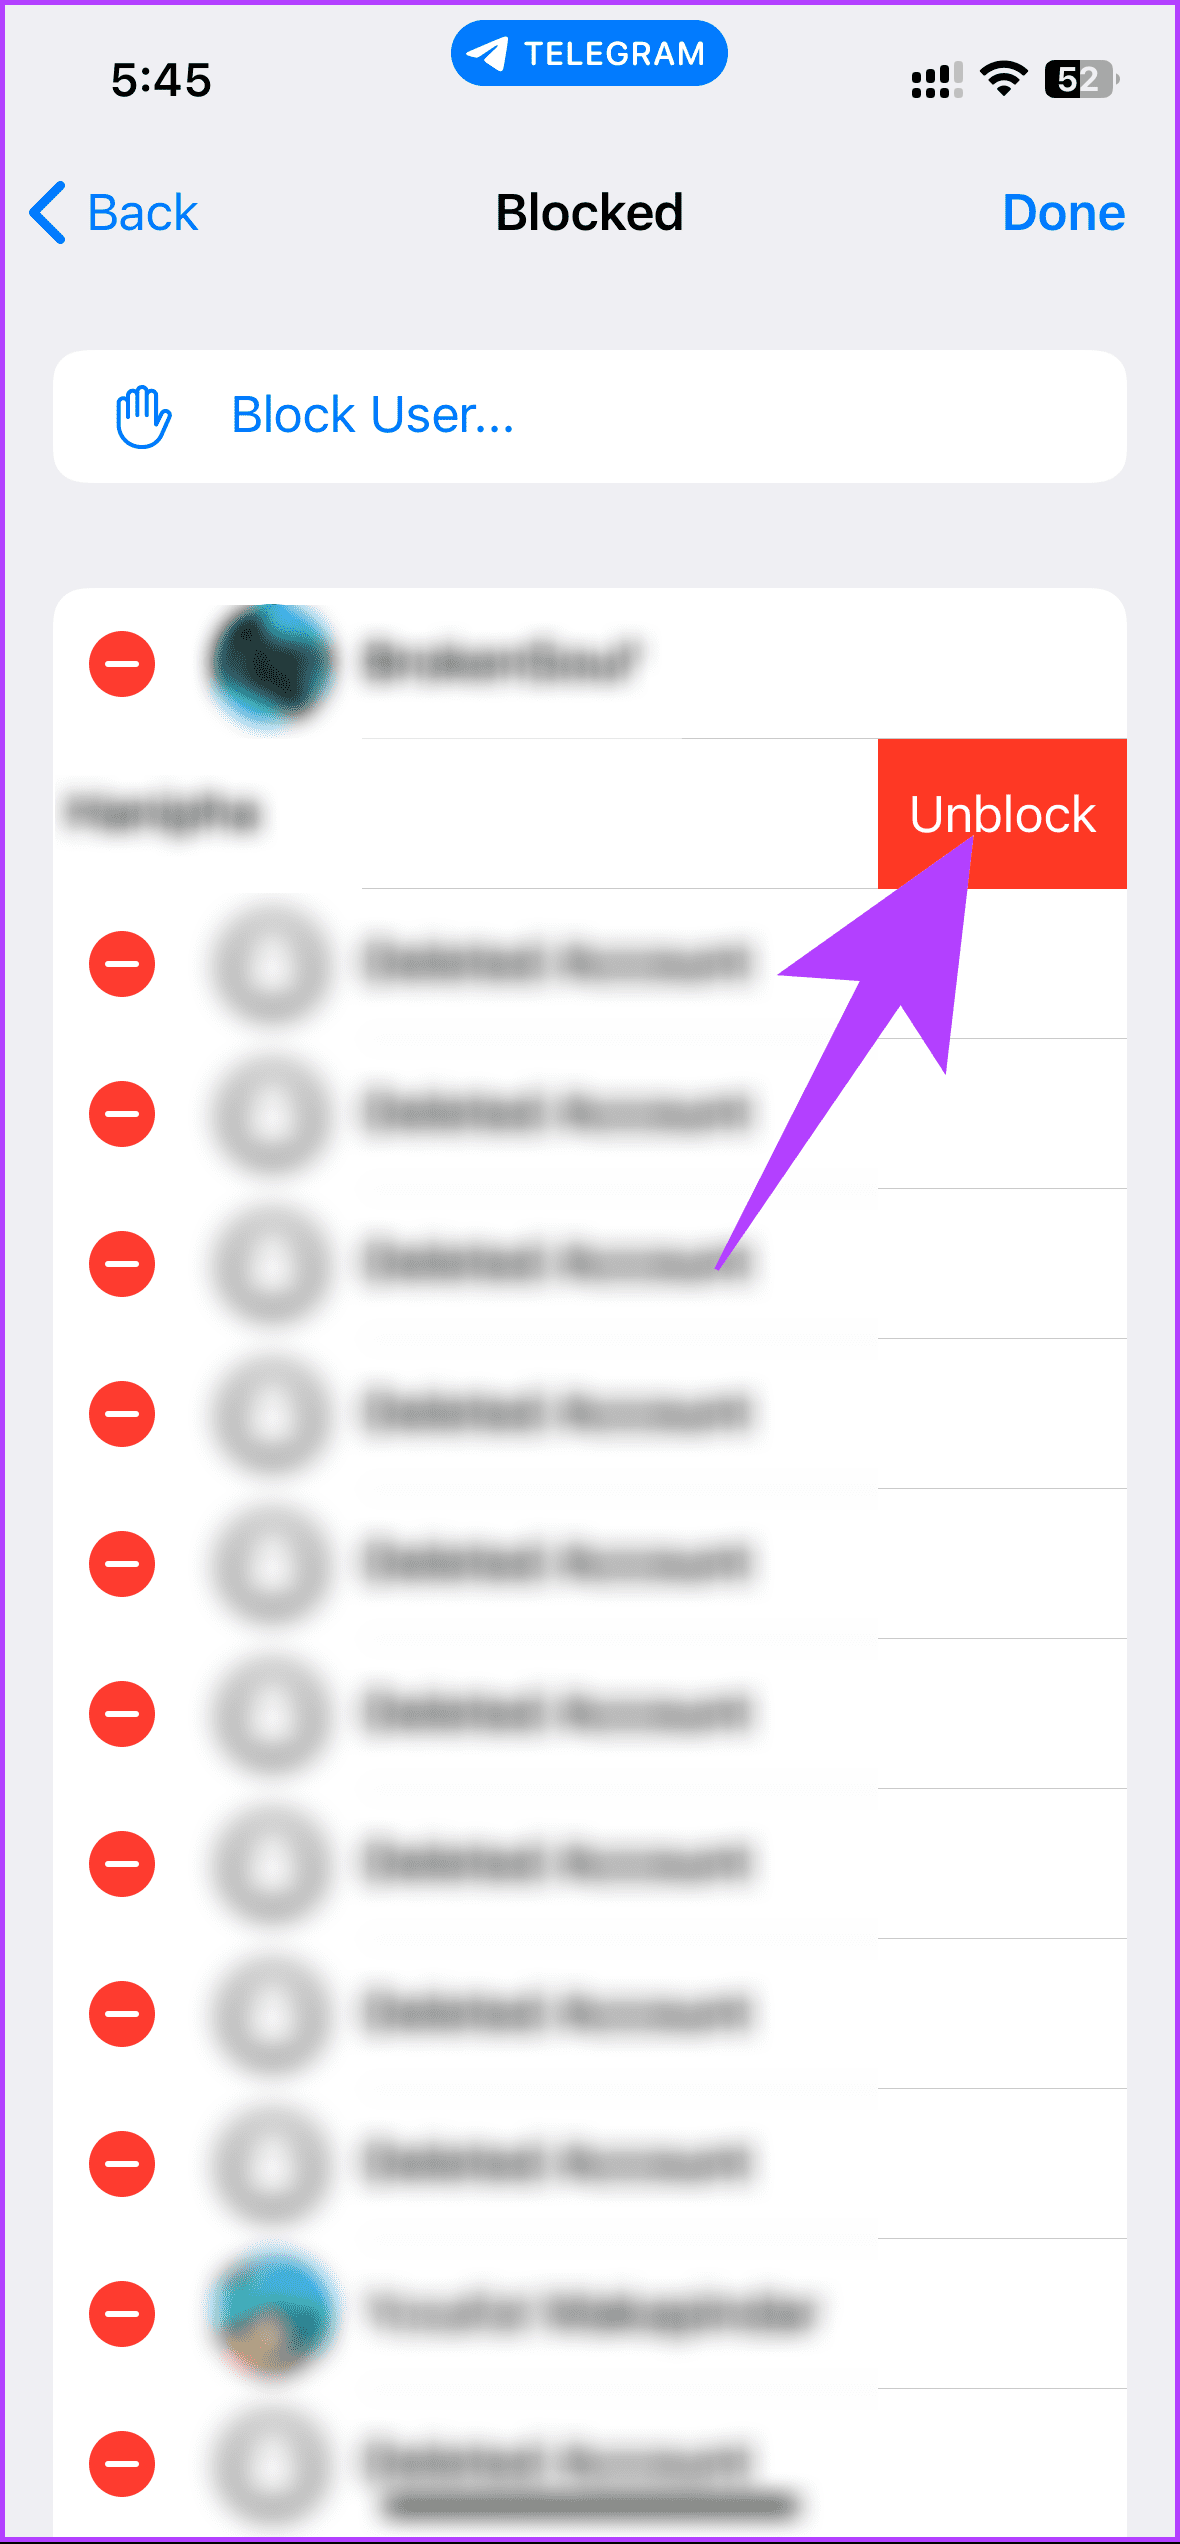 Select Unblock